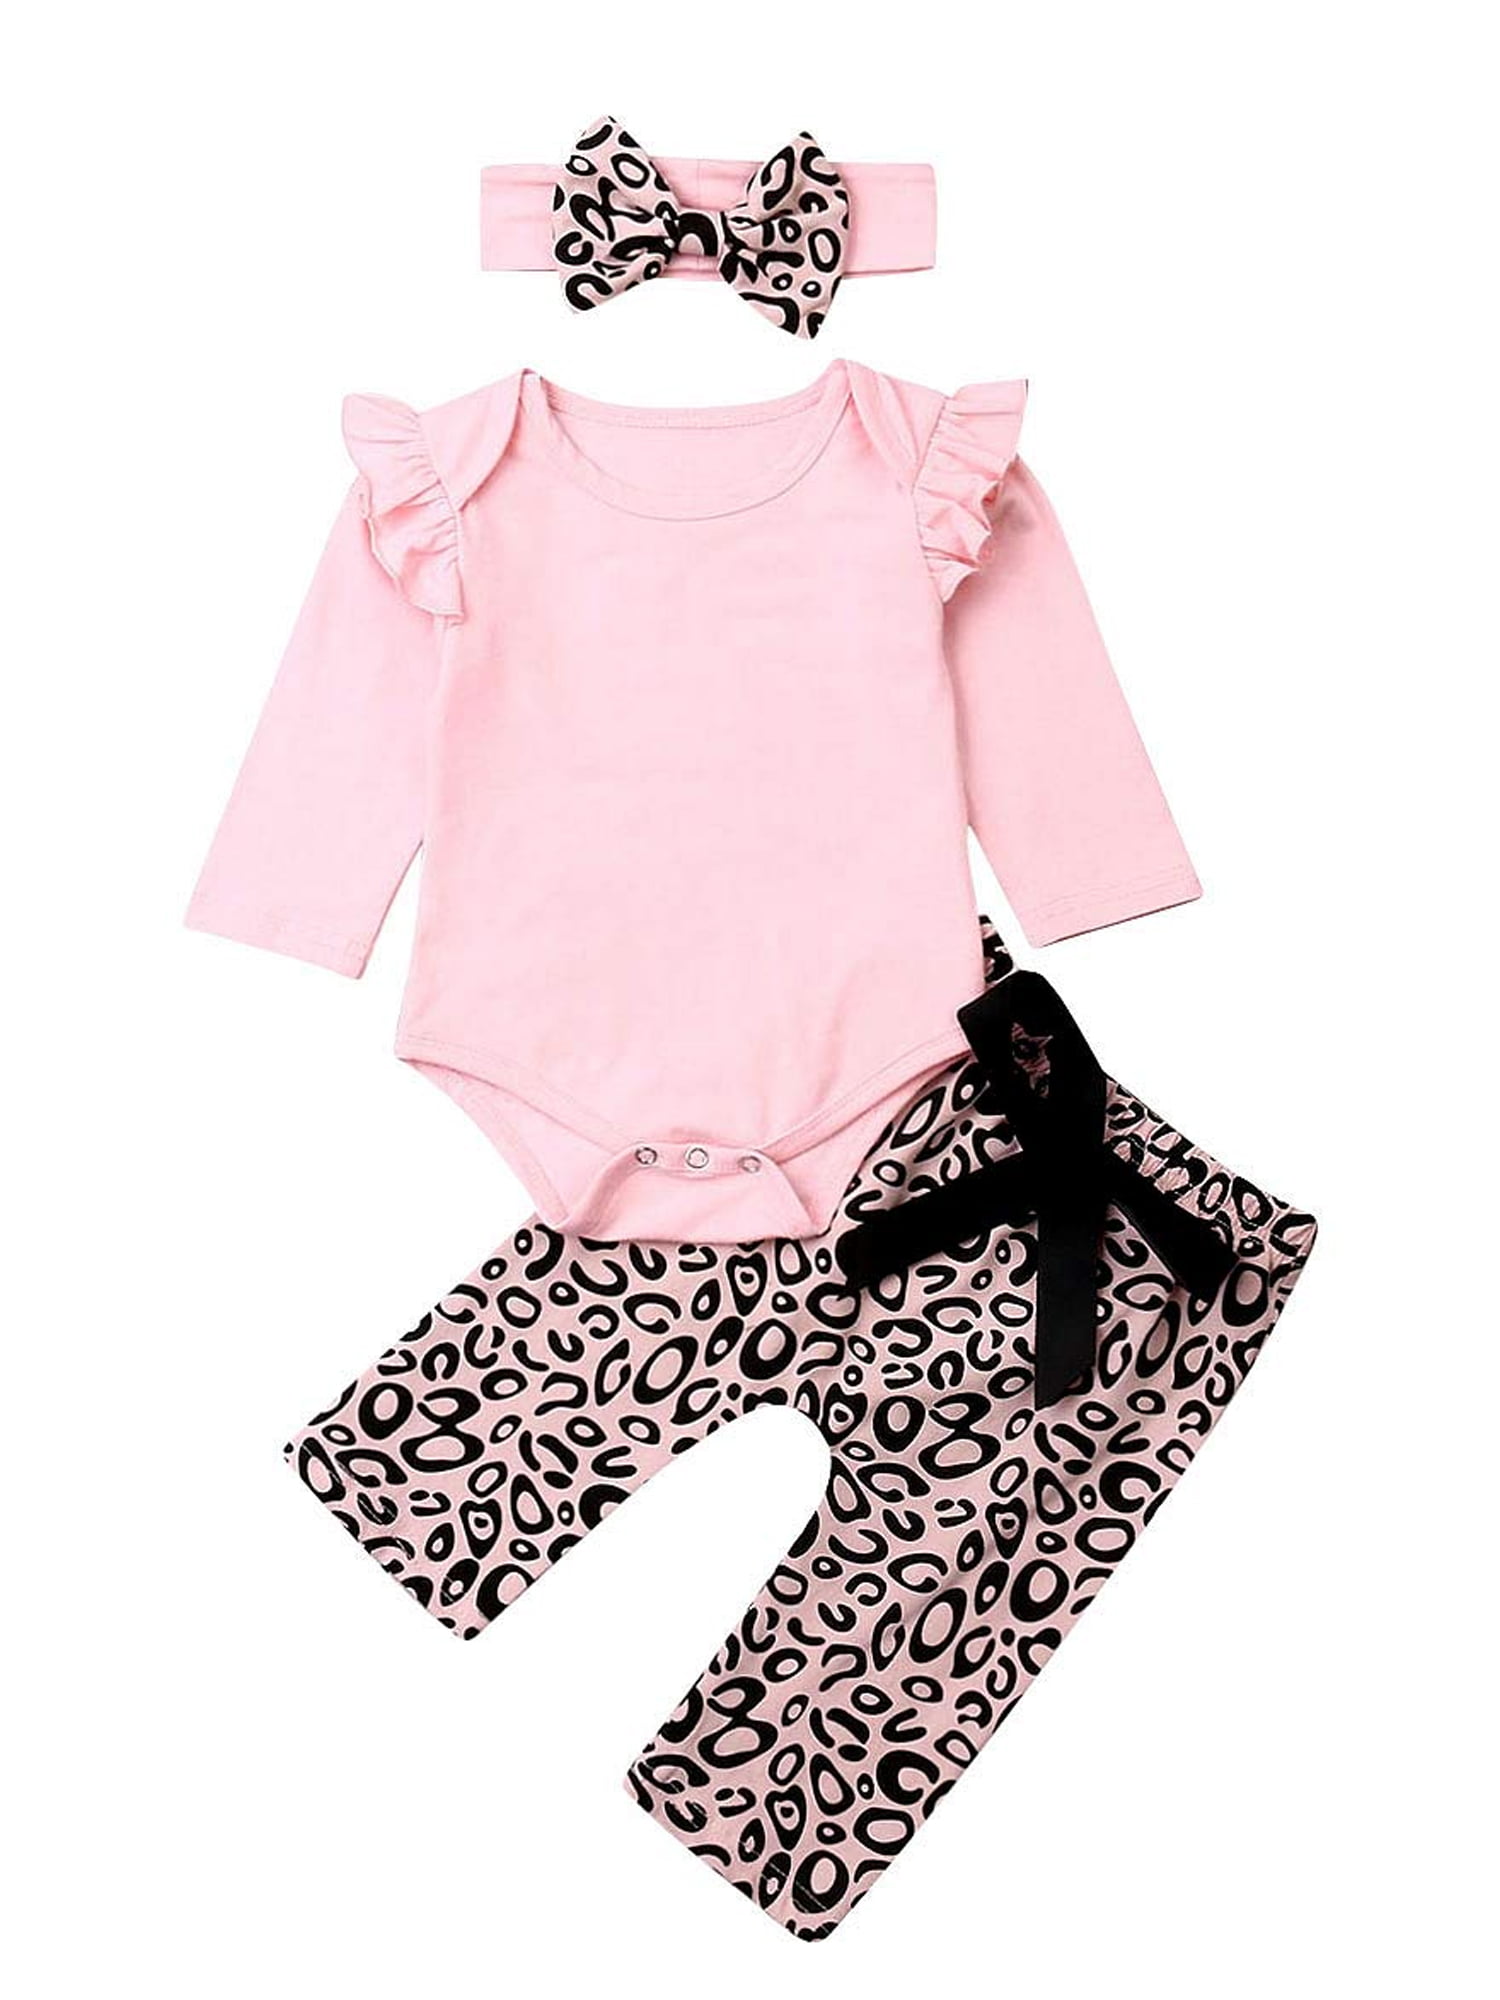 mettime Baby Girls Ruffle Romper Newborn Infant Short Sleeve Bodysuit Jumpsuit 0-2T Girl Clothes